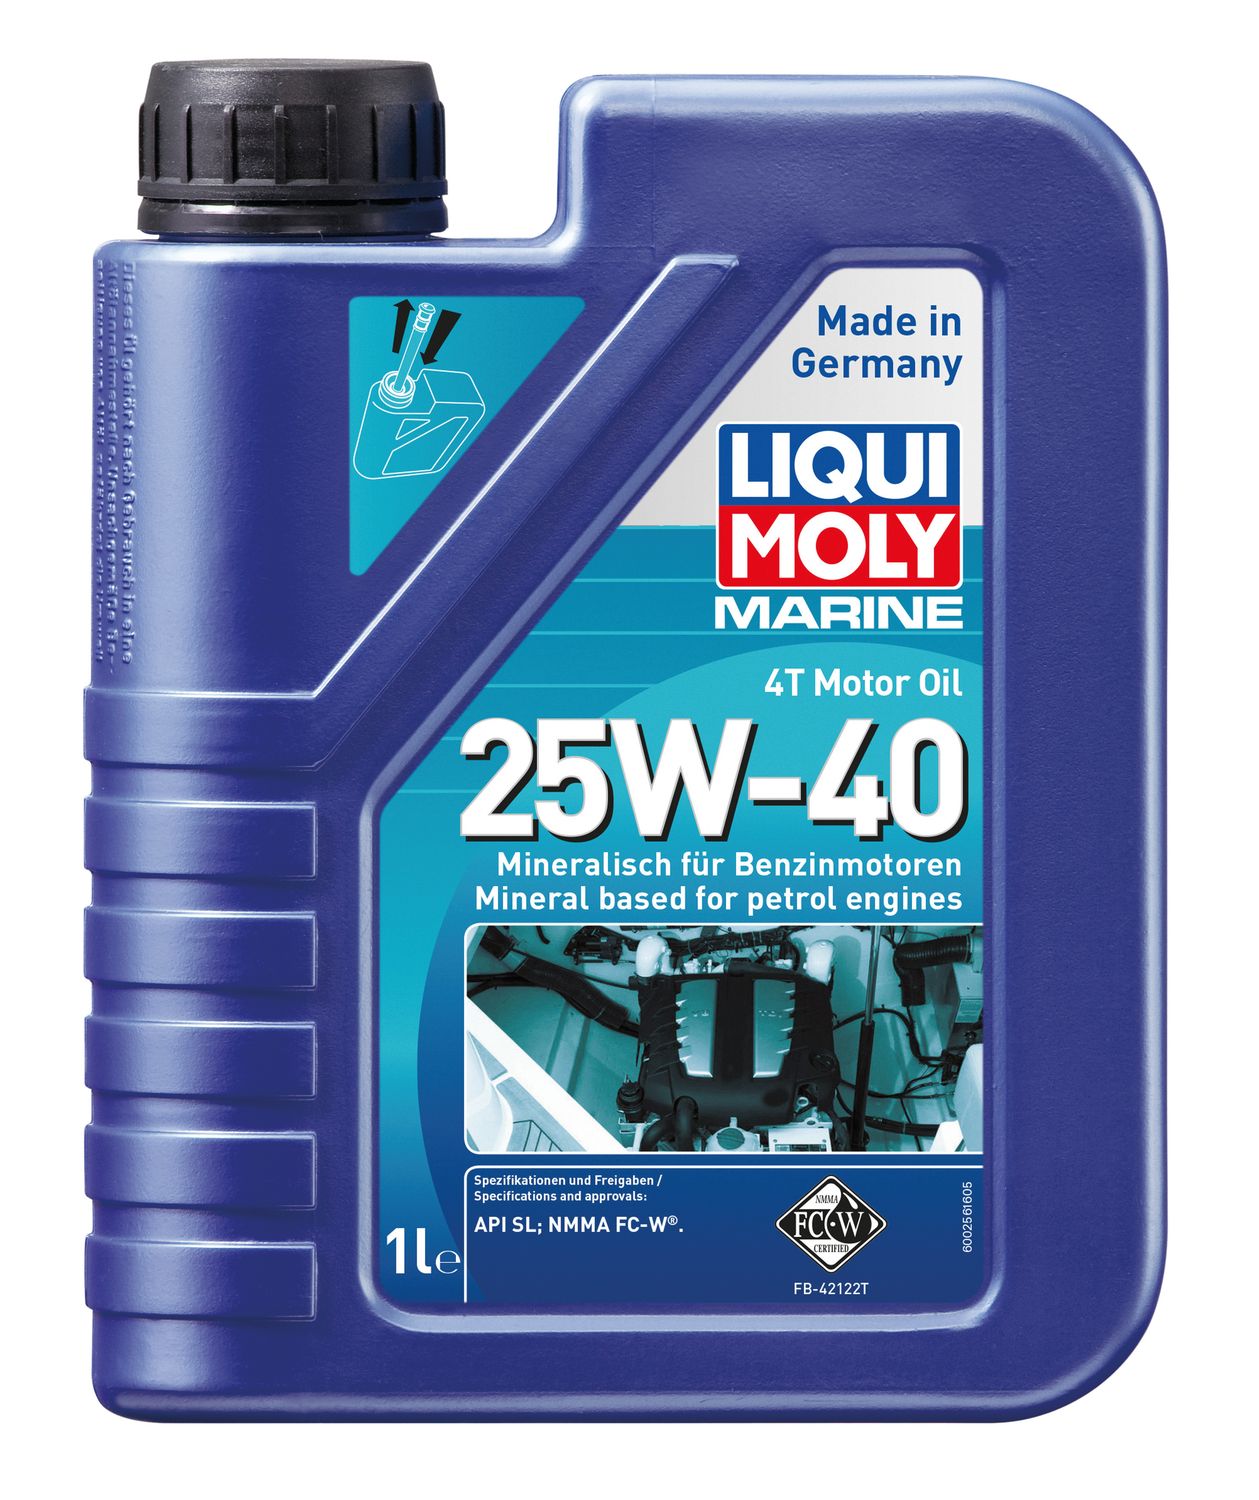 LIQUI MOLY Marine 4T Motor Oil 25W 40